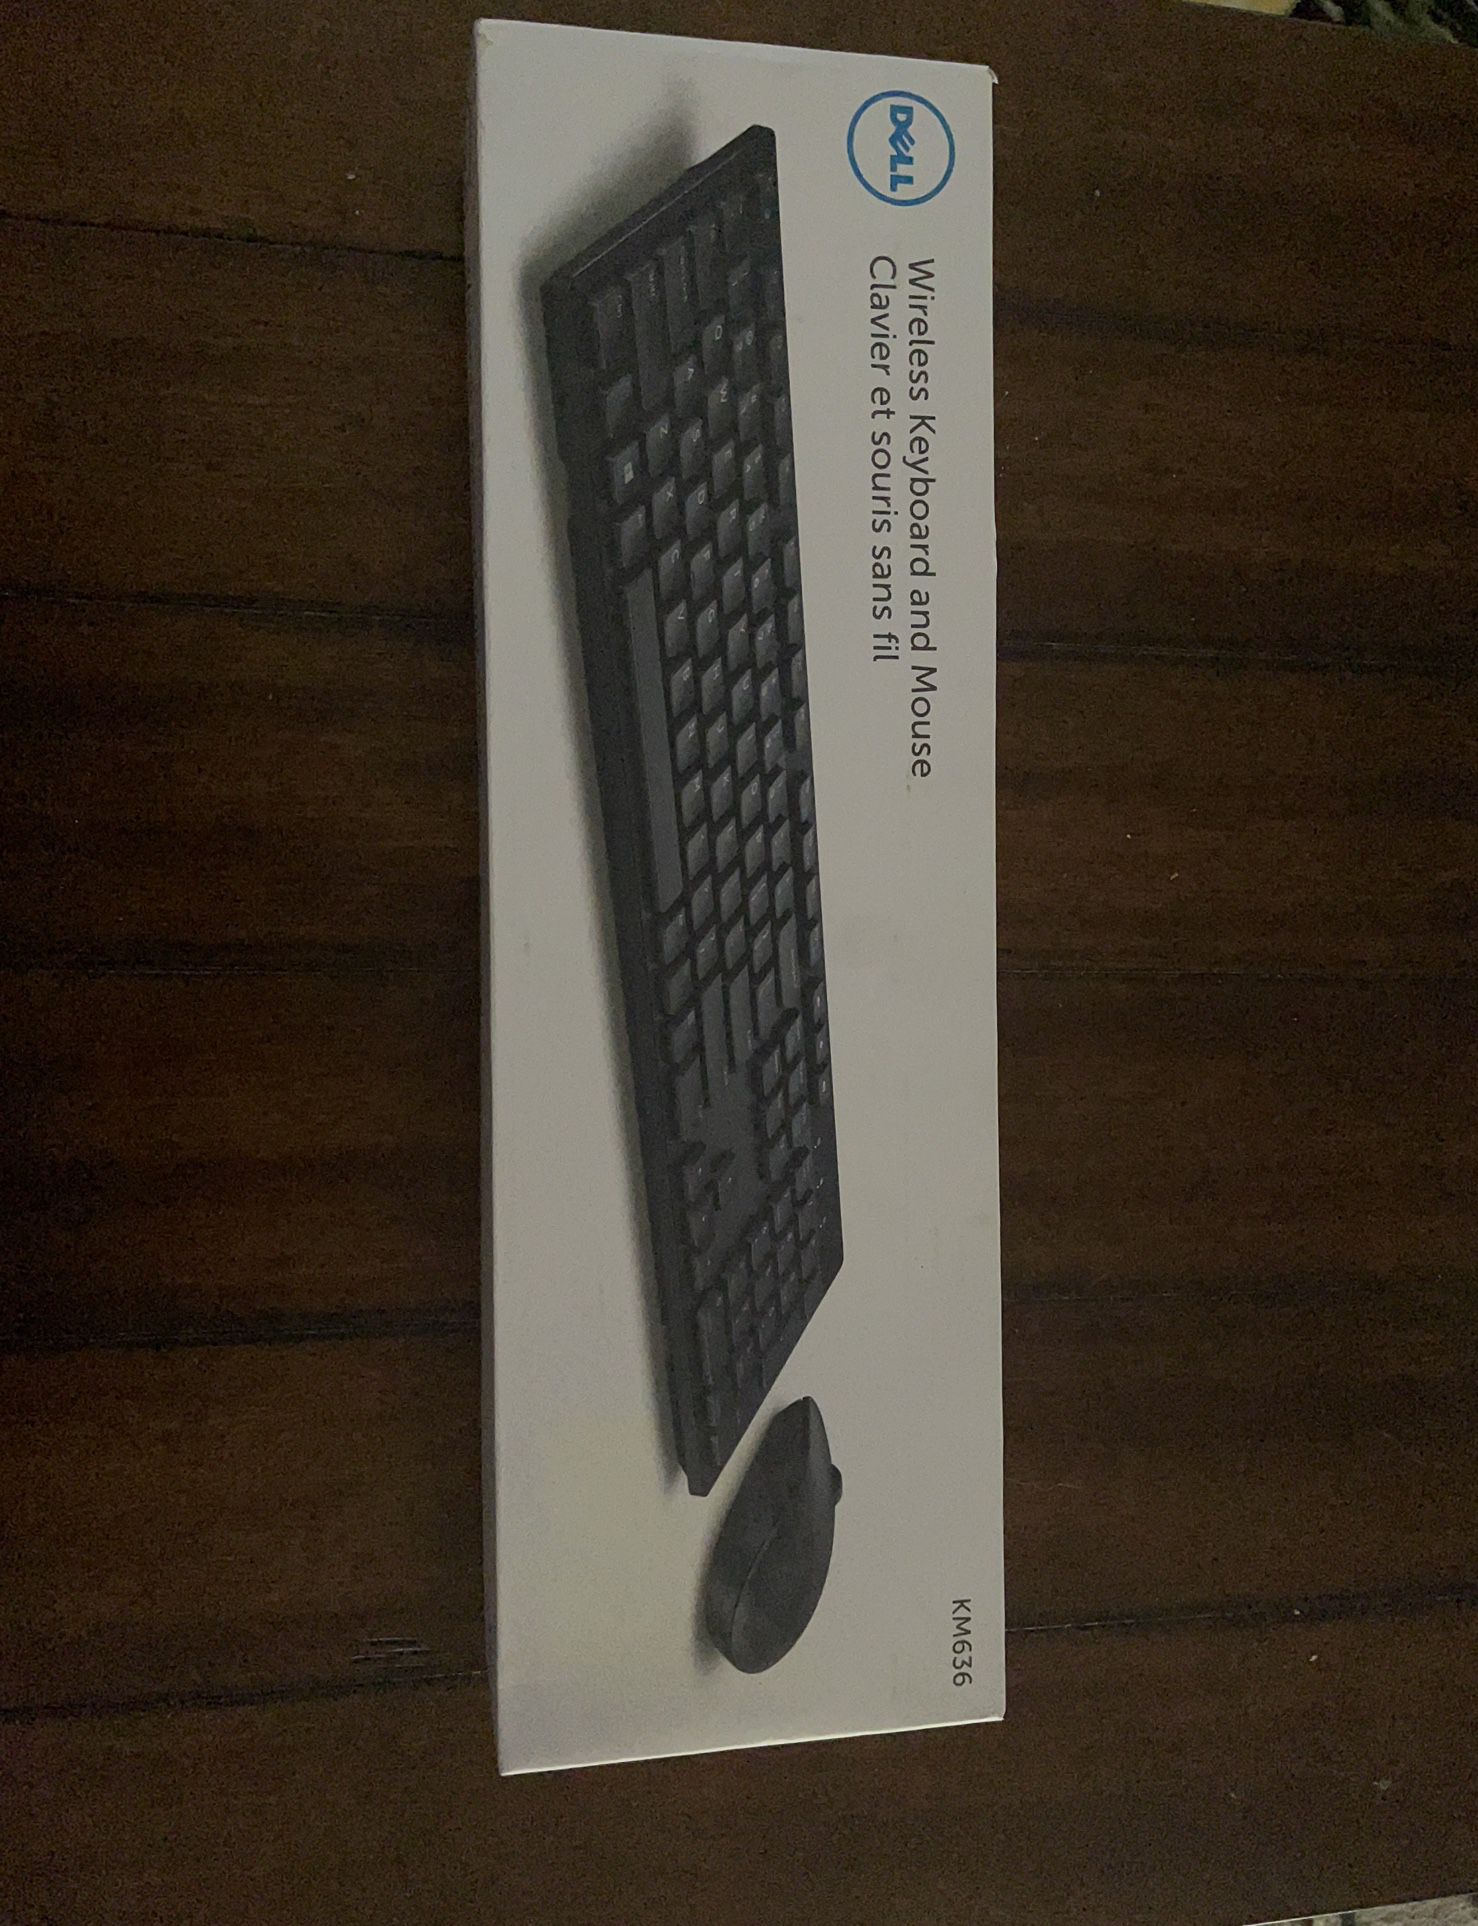 Dell KM636 Wireless Keyboard & Mouse Combo